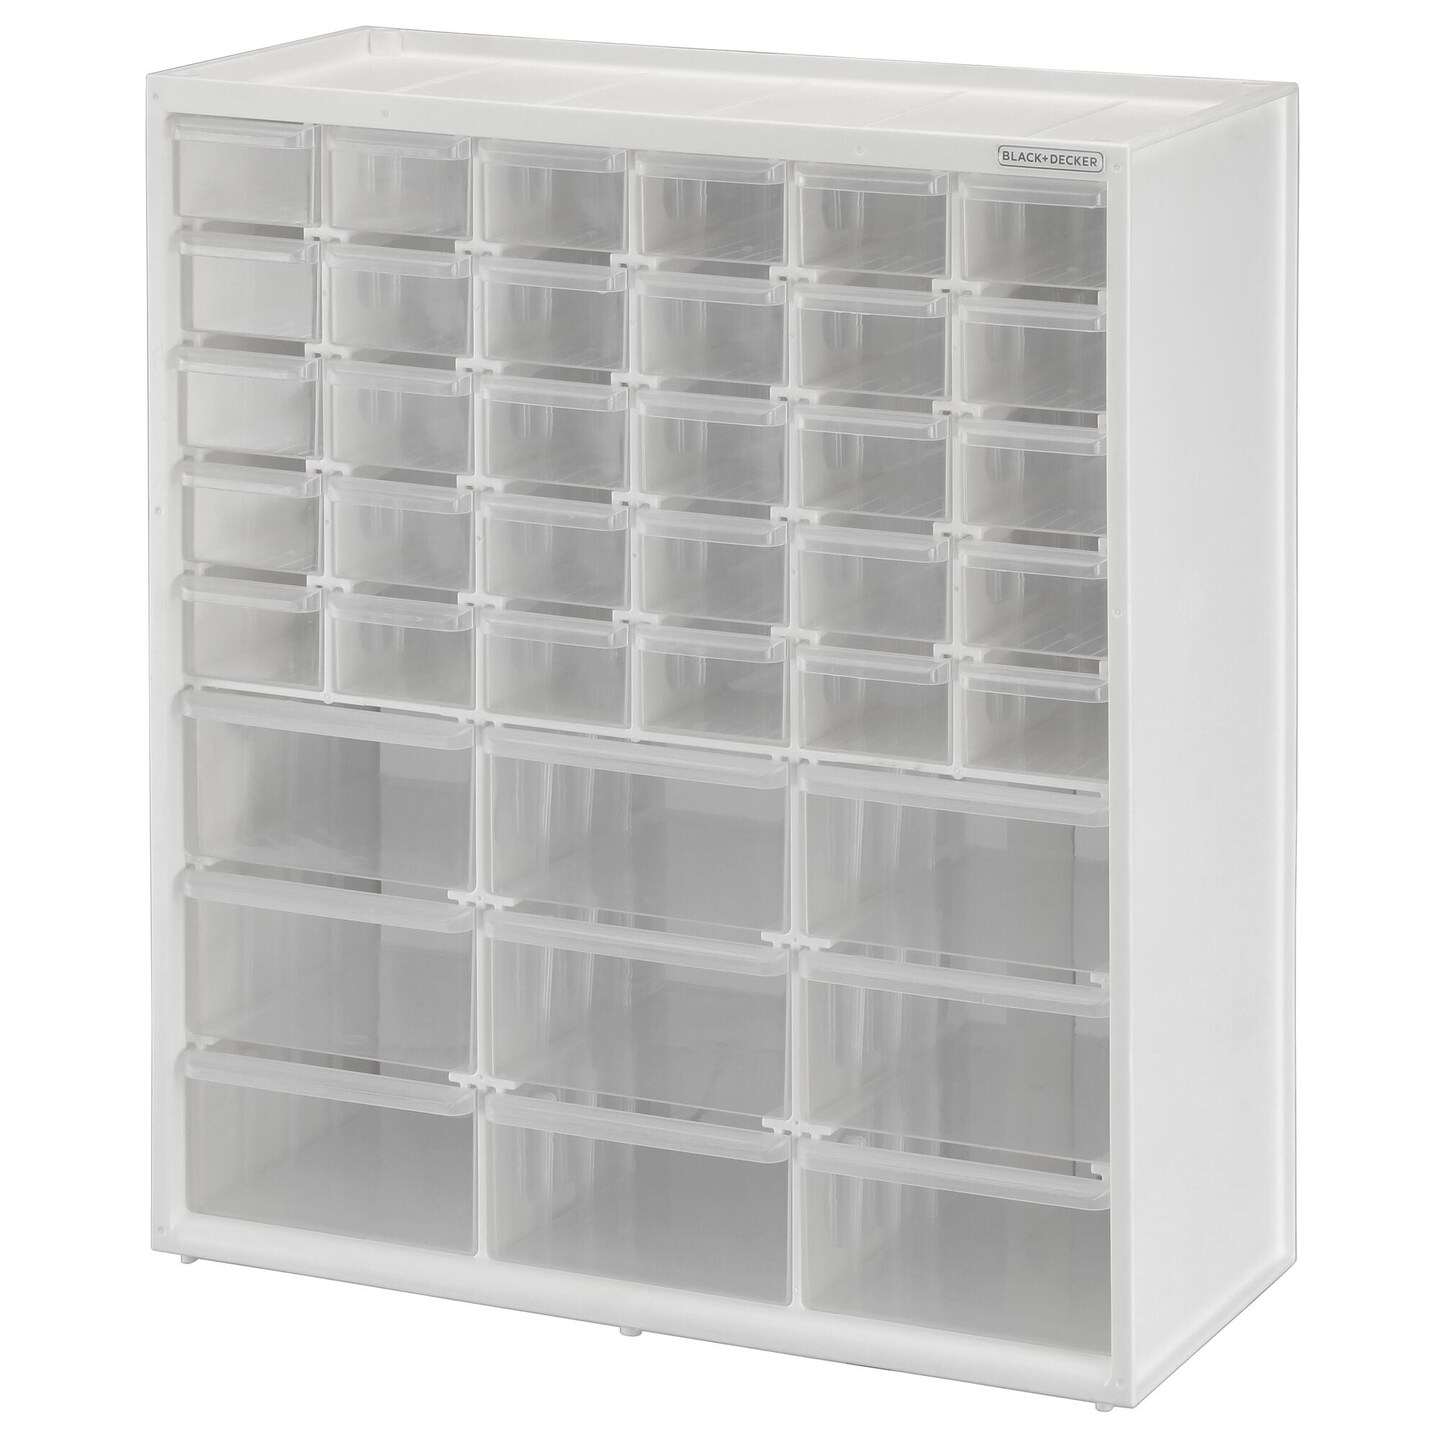 Shelf Bin Shelving Systems, Shelf Bin Systems, Shelf Bin Units, Plastic Shelf  Bins